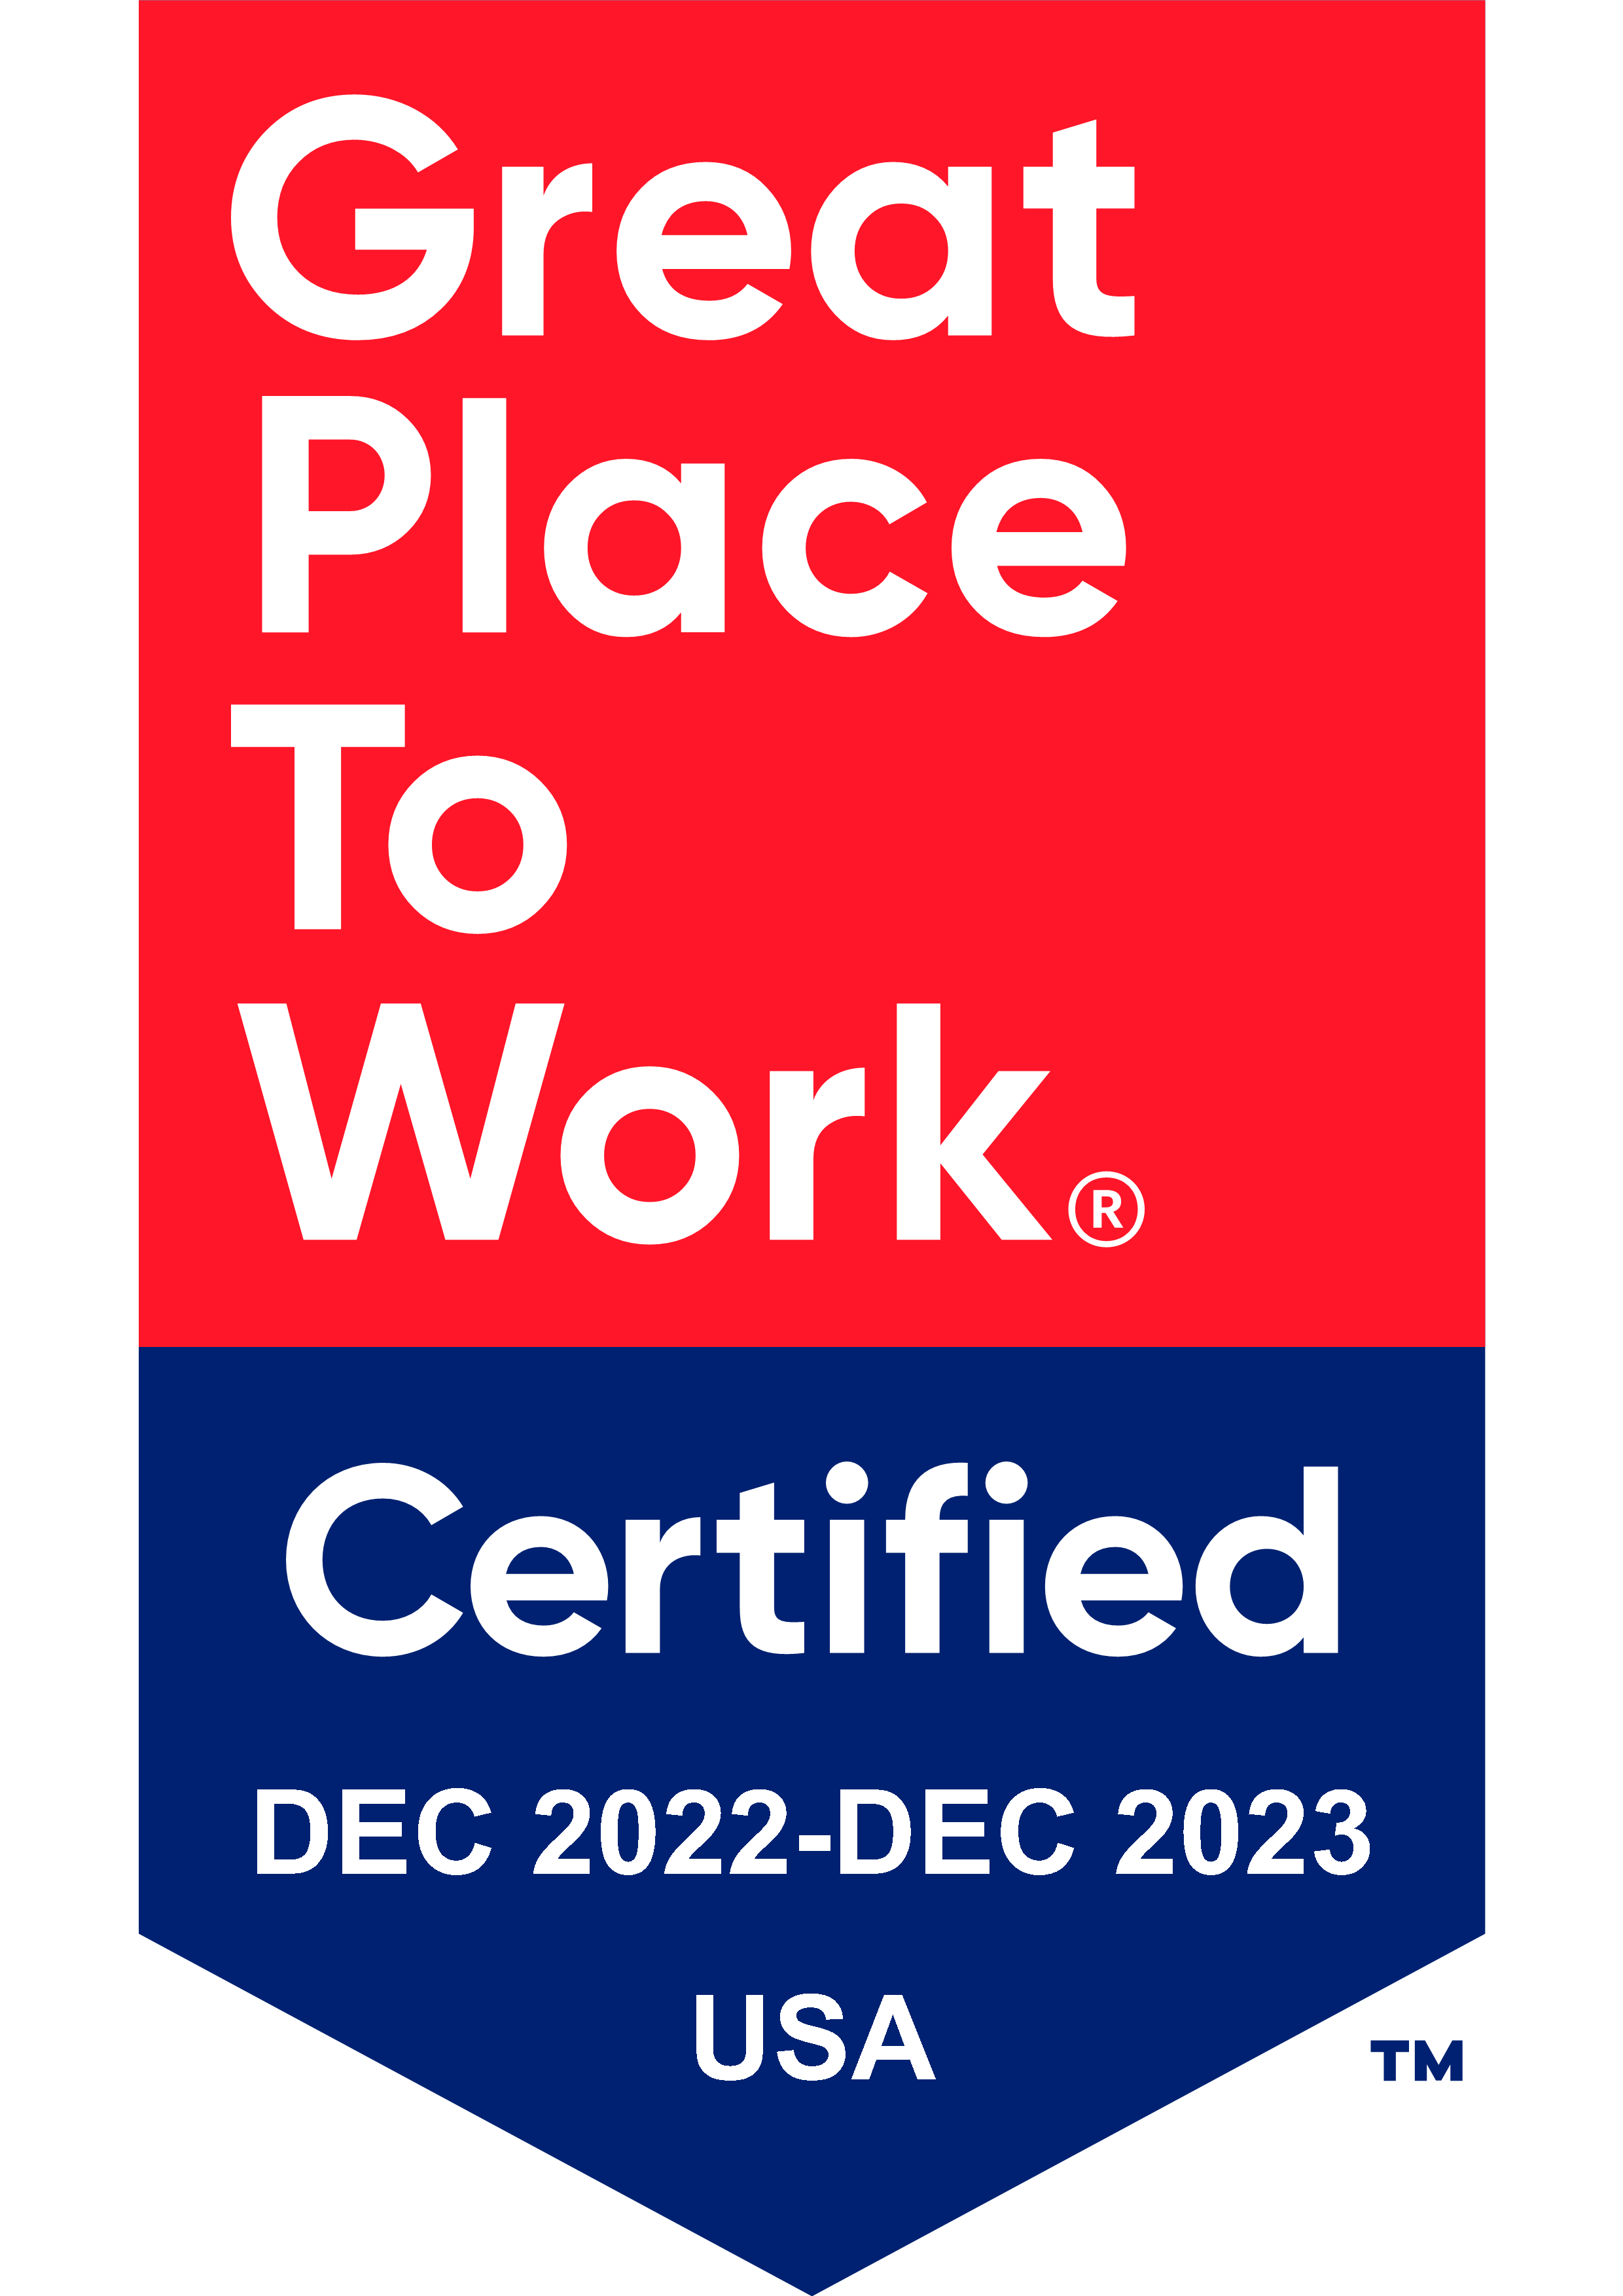 Barrett_Business_Services_Inc_2022_Certification_Badge